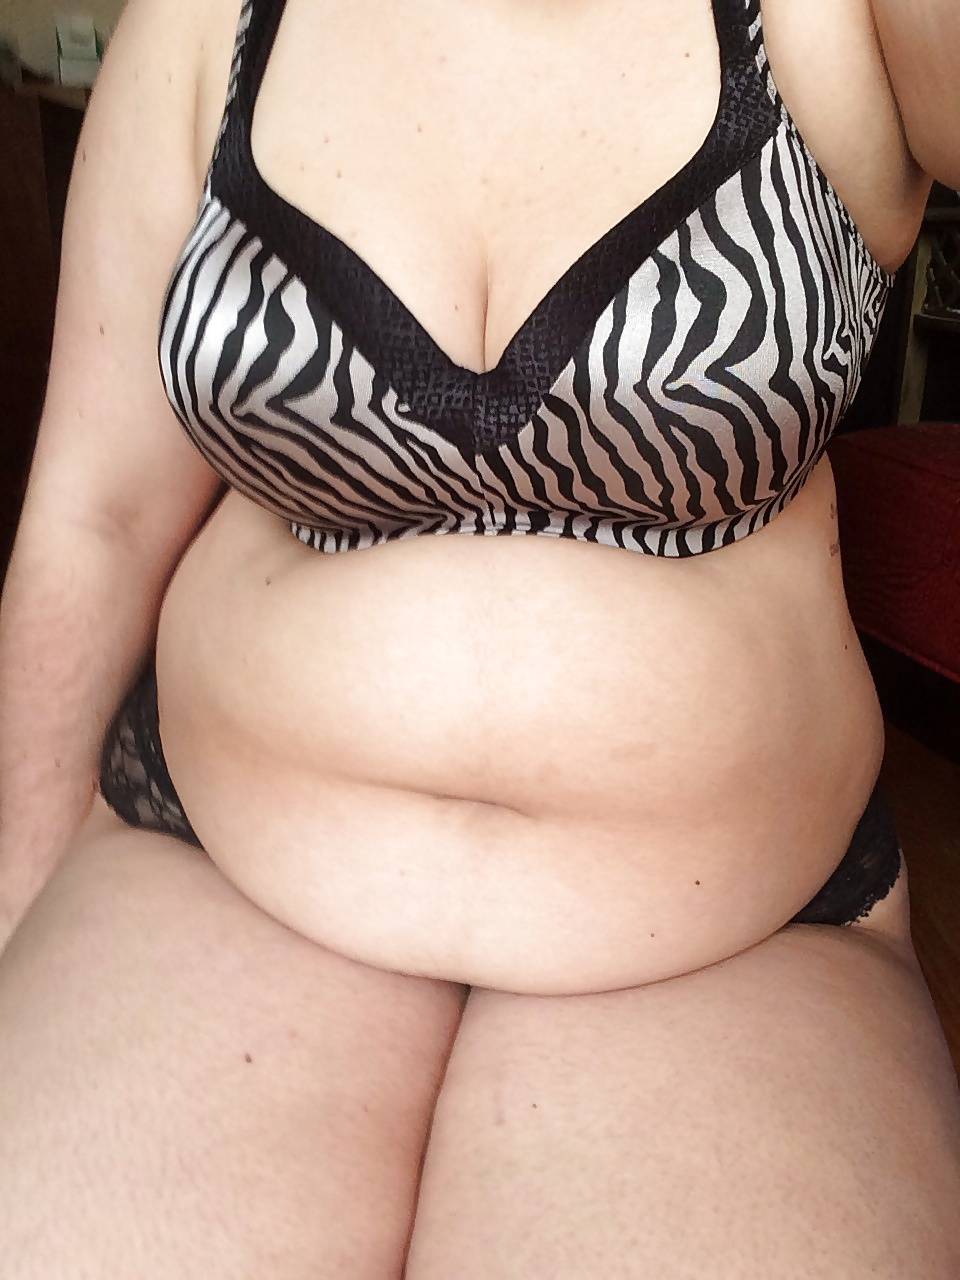 BBW's, Chubbies, Bellies with Big Tits 2